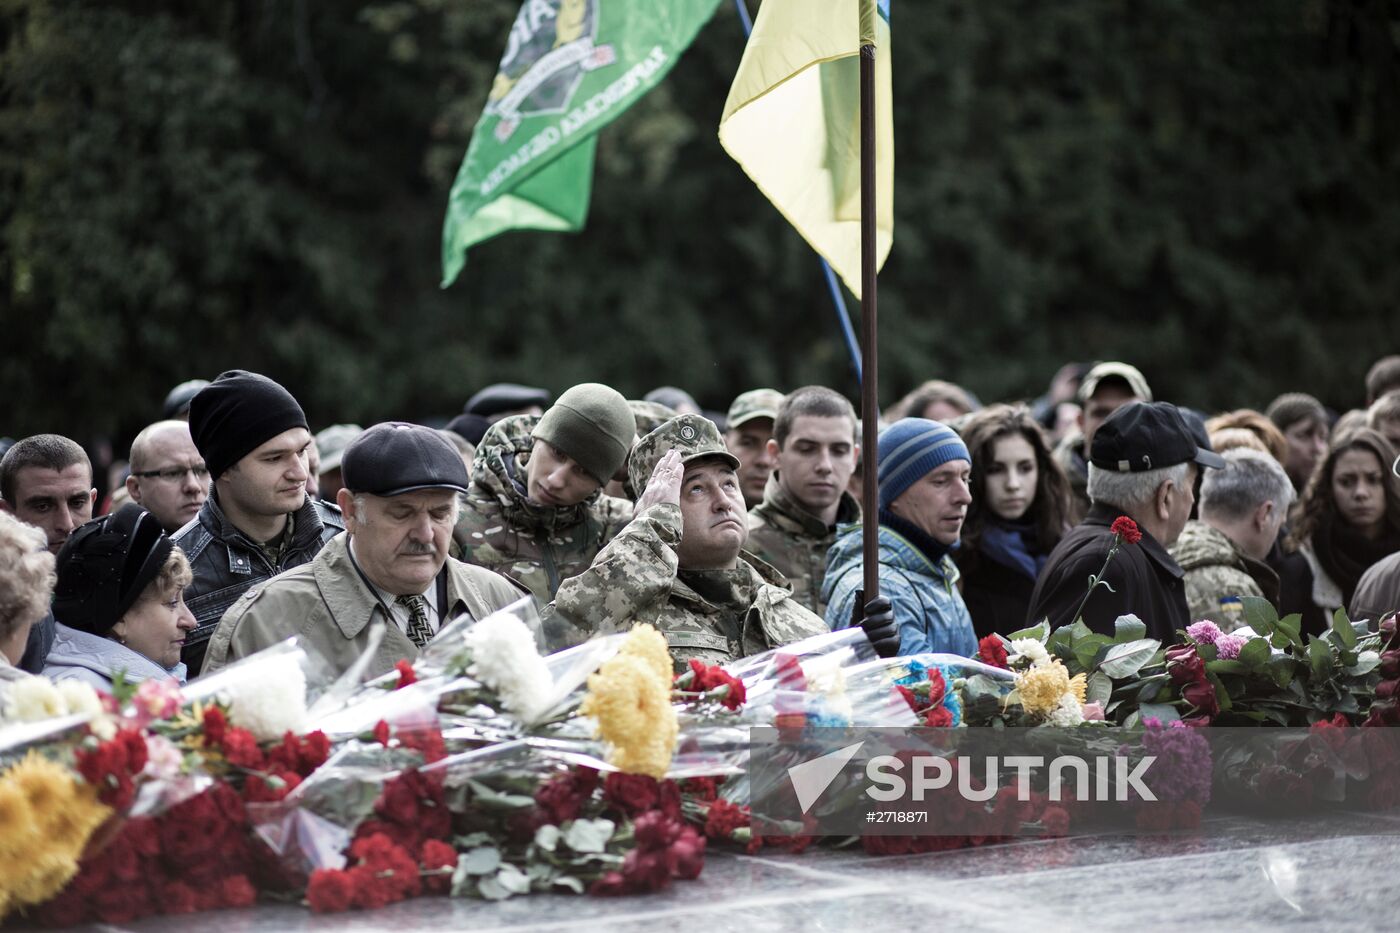 Defender of Ukraine Day celebration